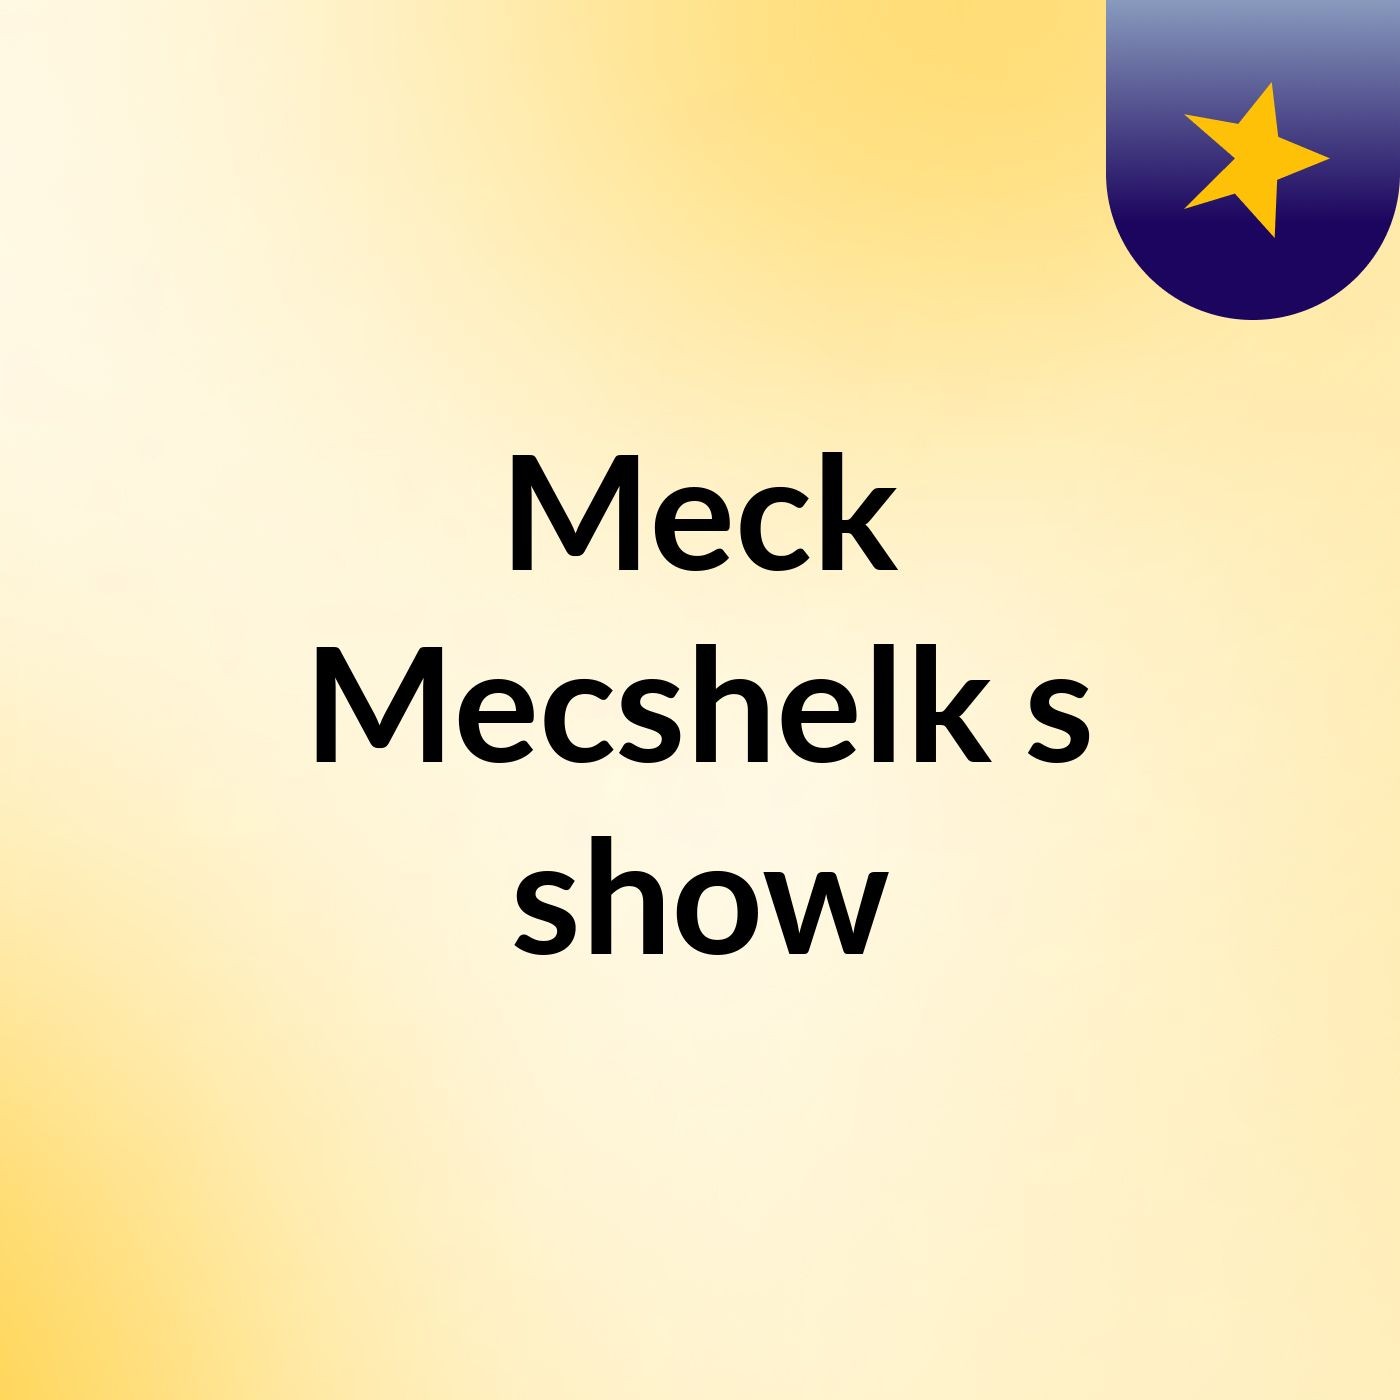 Episode 2 - Meck Mecshelk's show